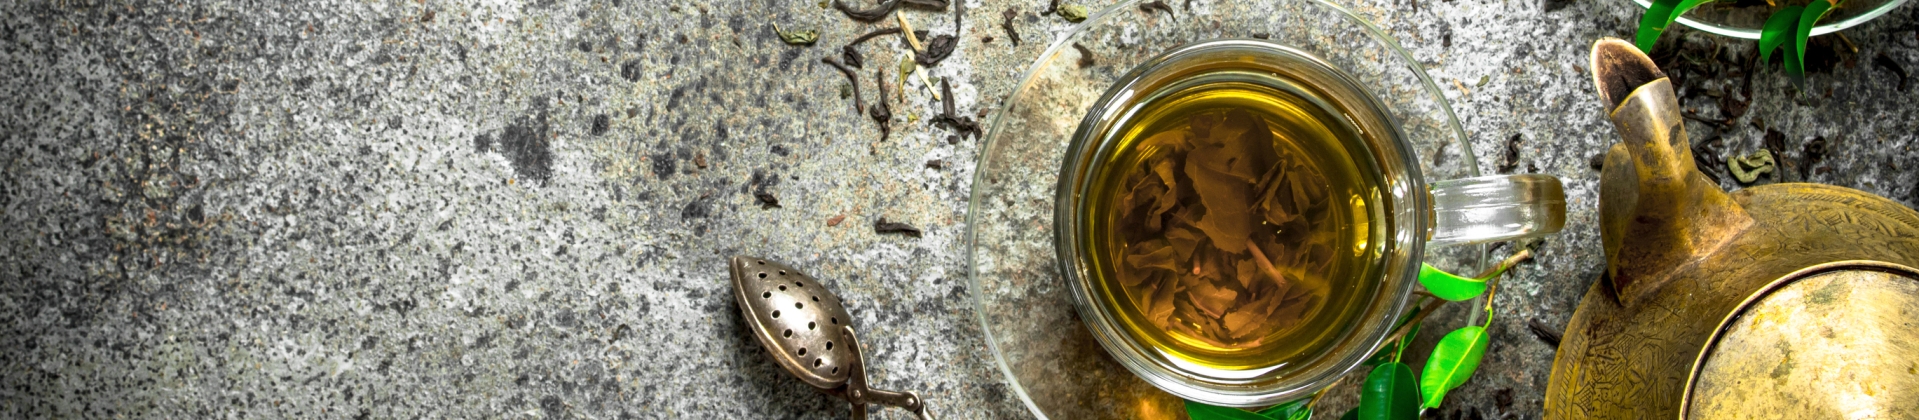 Green Teas - Cup of Tea